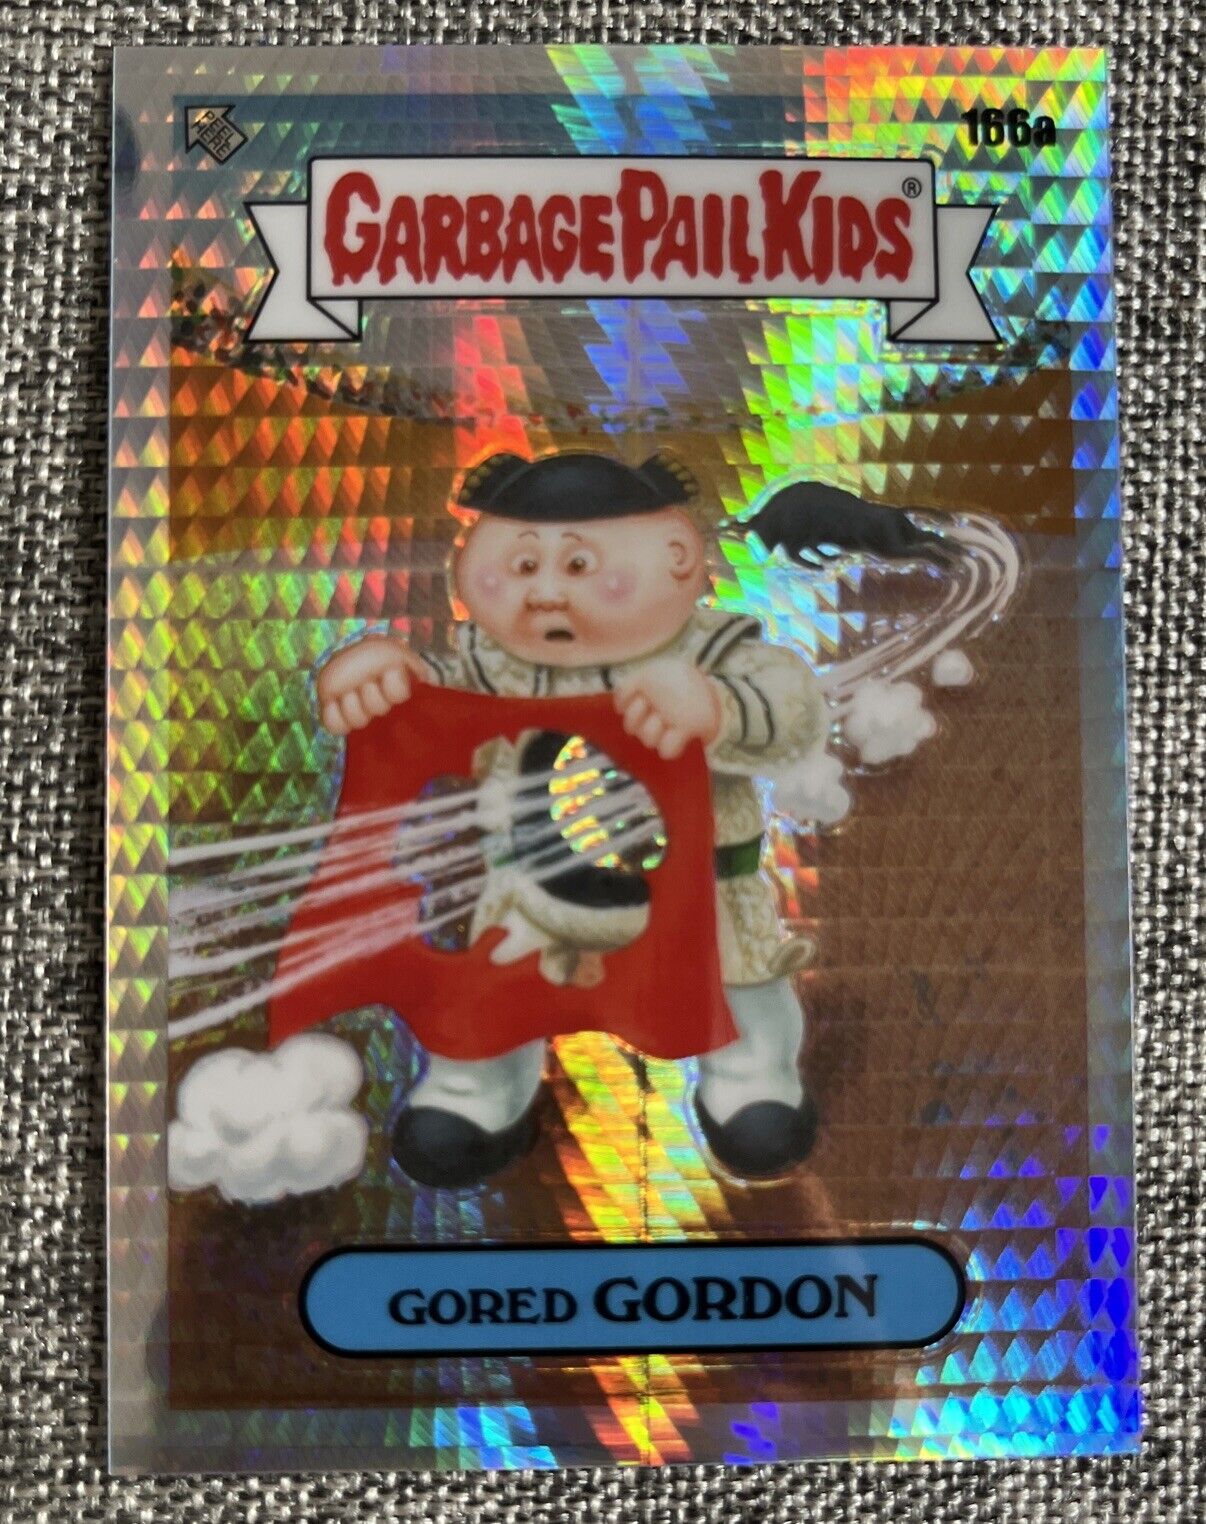 2021 Garbage Pail Kids GPK Chrome OS 4 Prism Refractor Gored Gordon 166a /199